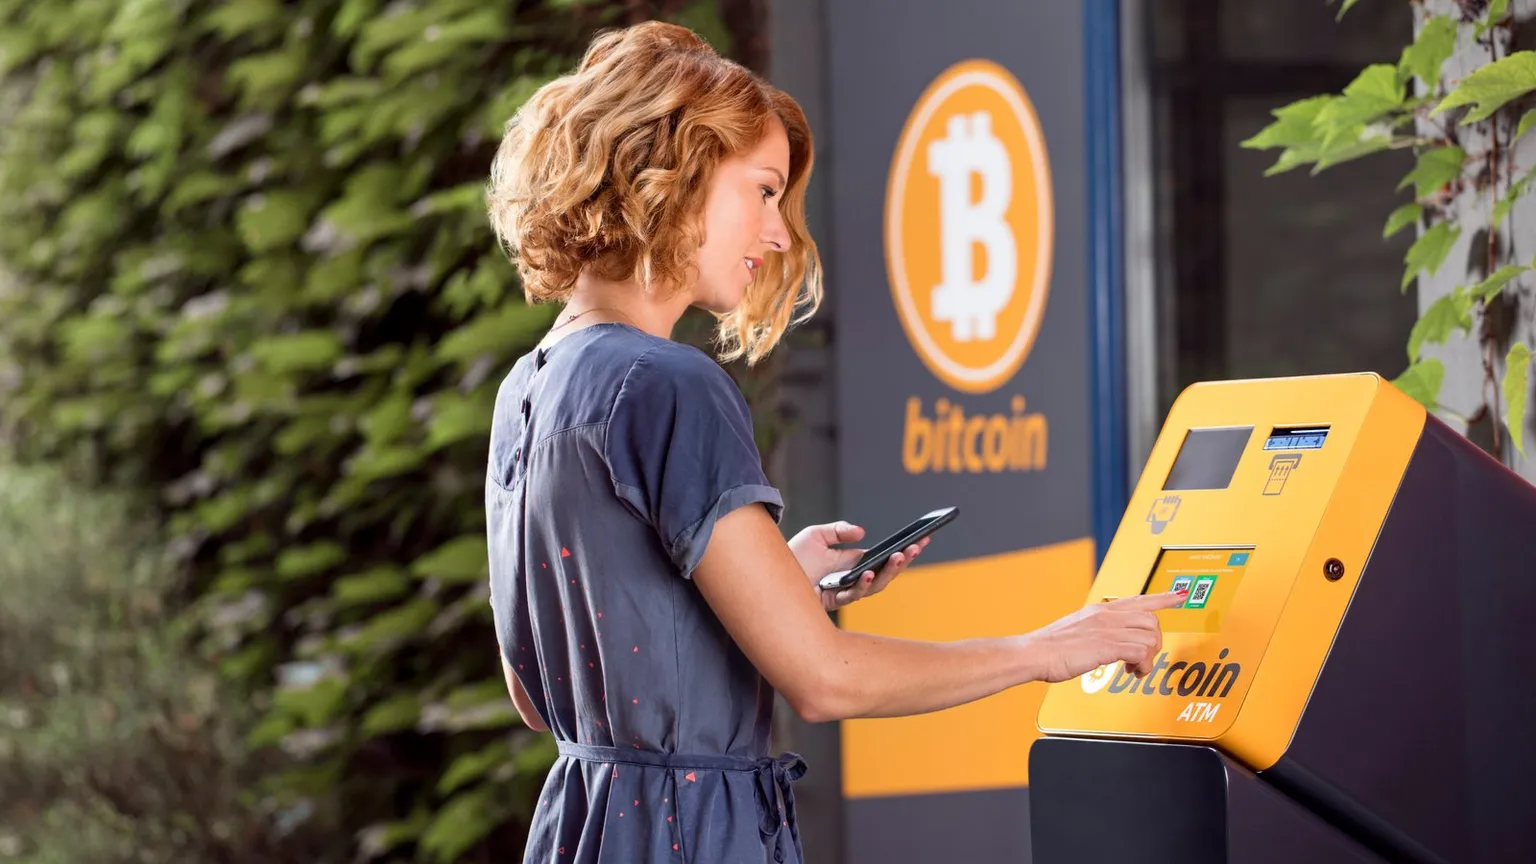 Cajero automático de bitcoin. Imagen: Shutterstock